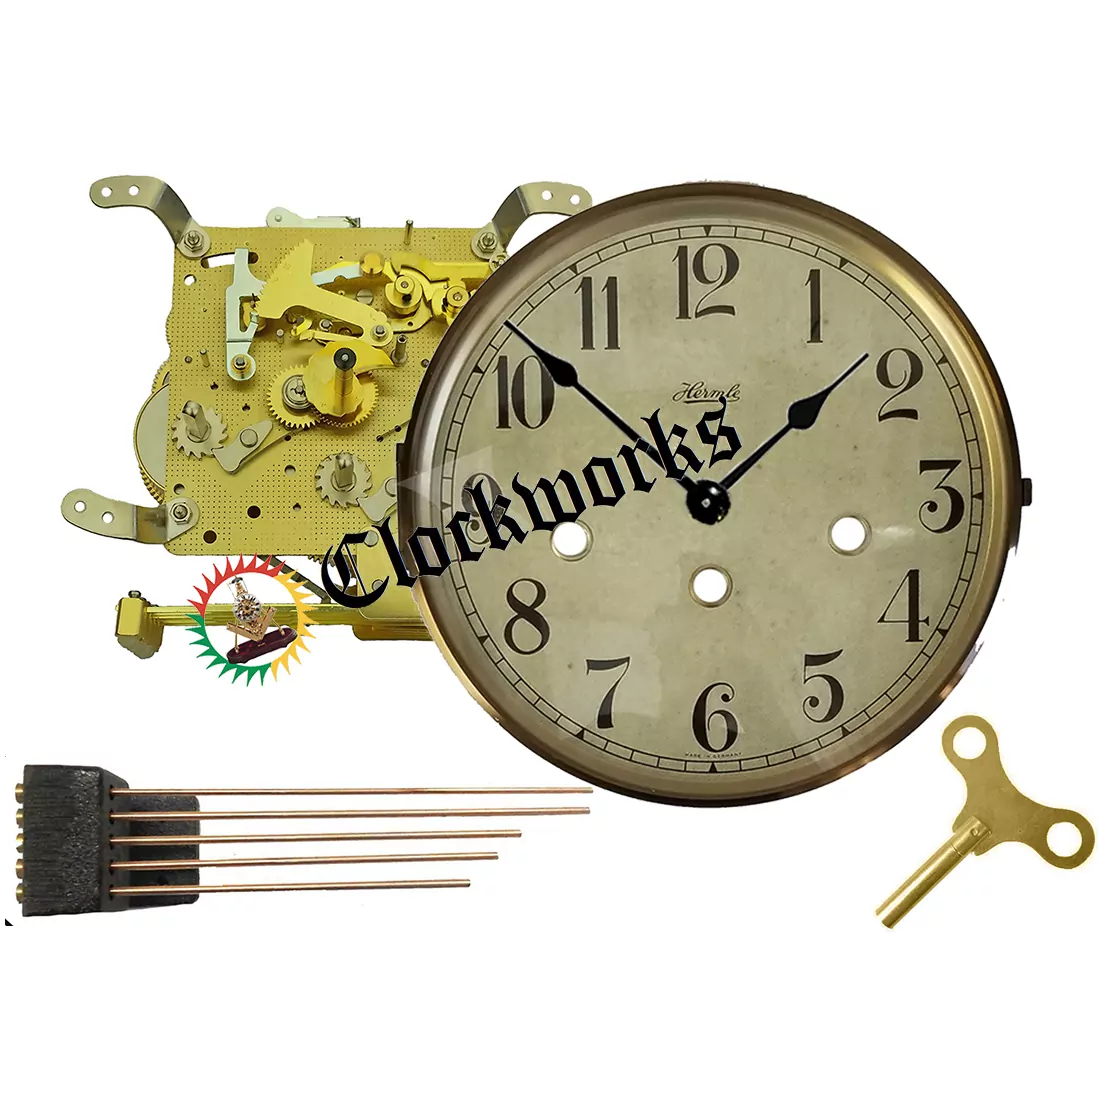 Gymnast Lam middernacht Mechanical Mantel Westminster Clock Kit - 1-800-381-7458 - Clockworks